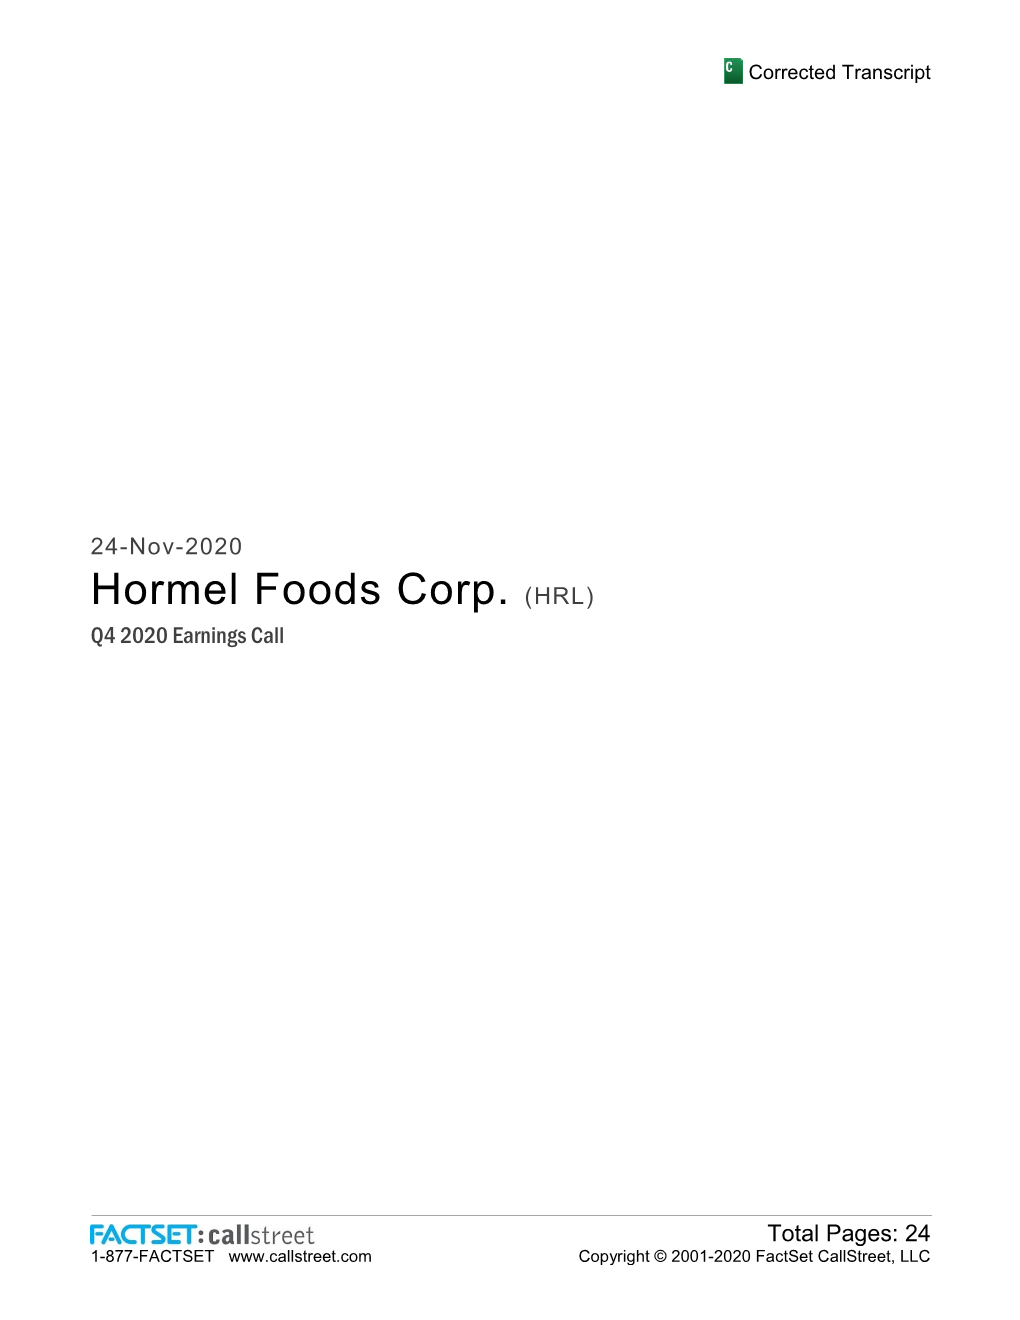 Hormel Foods Corp. (HRL) Q4 2020 Earnings Call